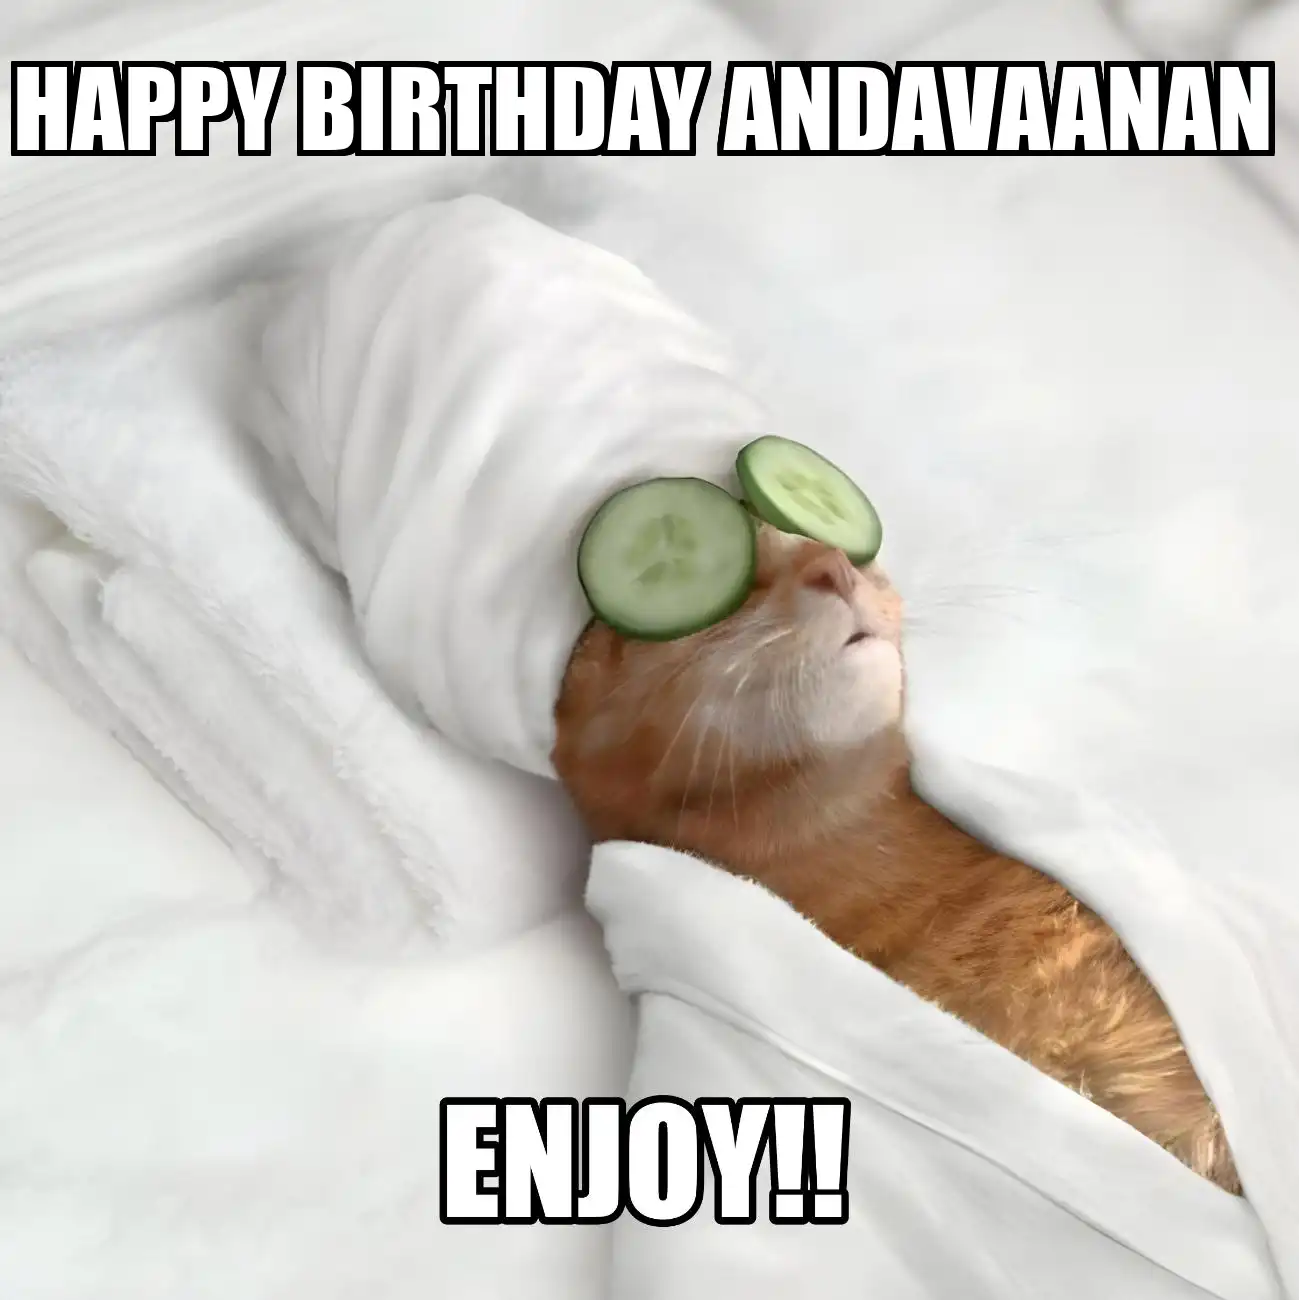 Happy Birthday Andavaanan Enjoy Cat Meme